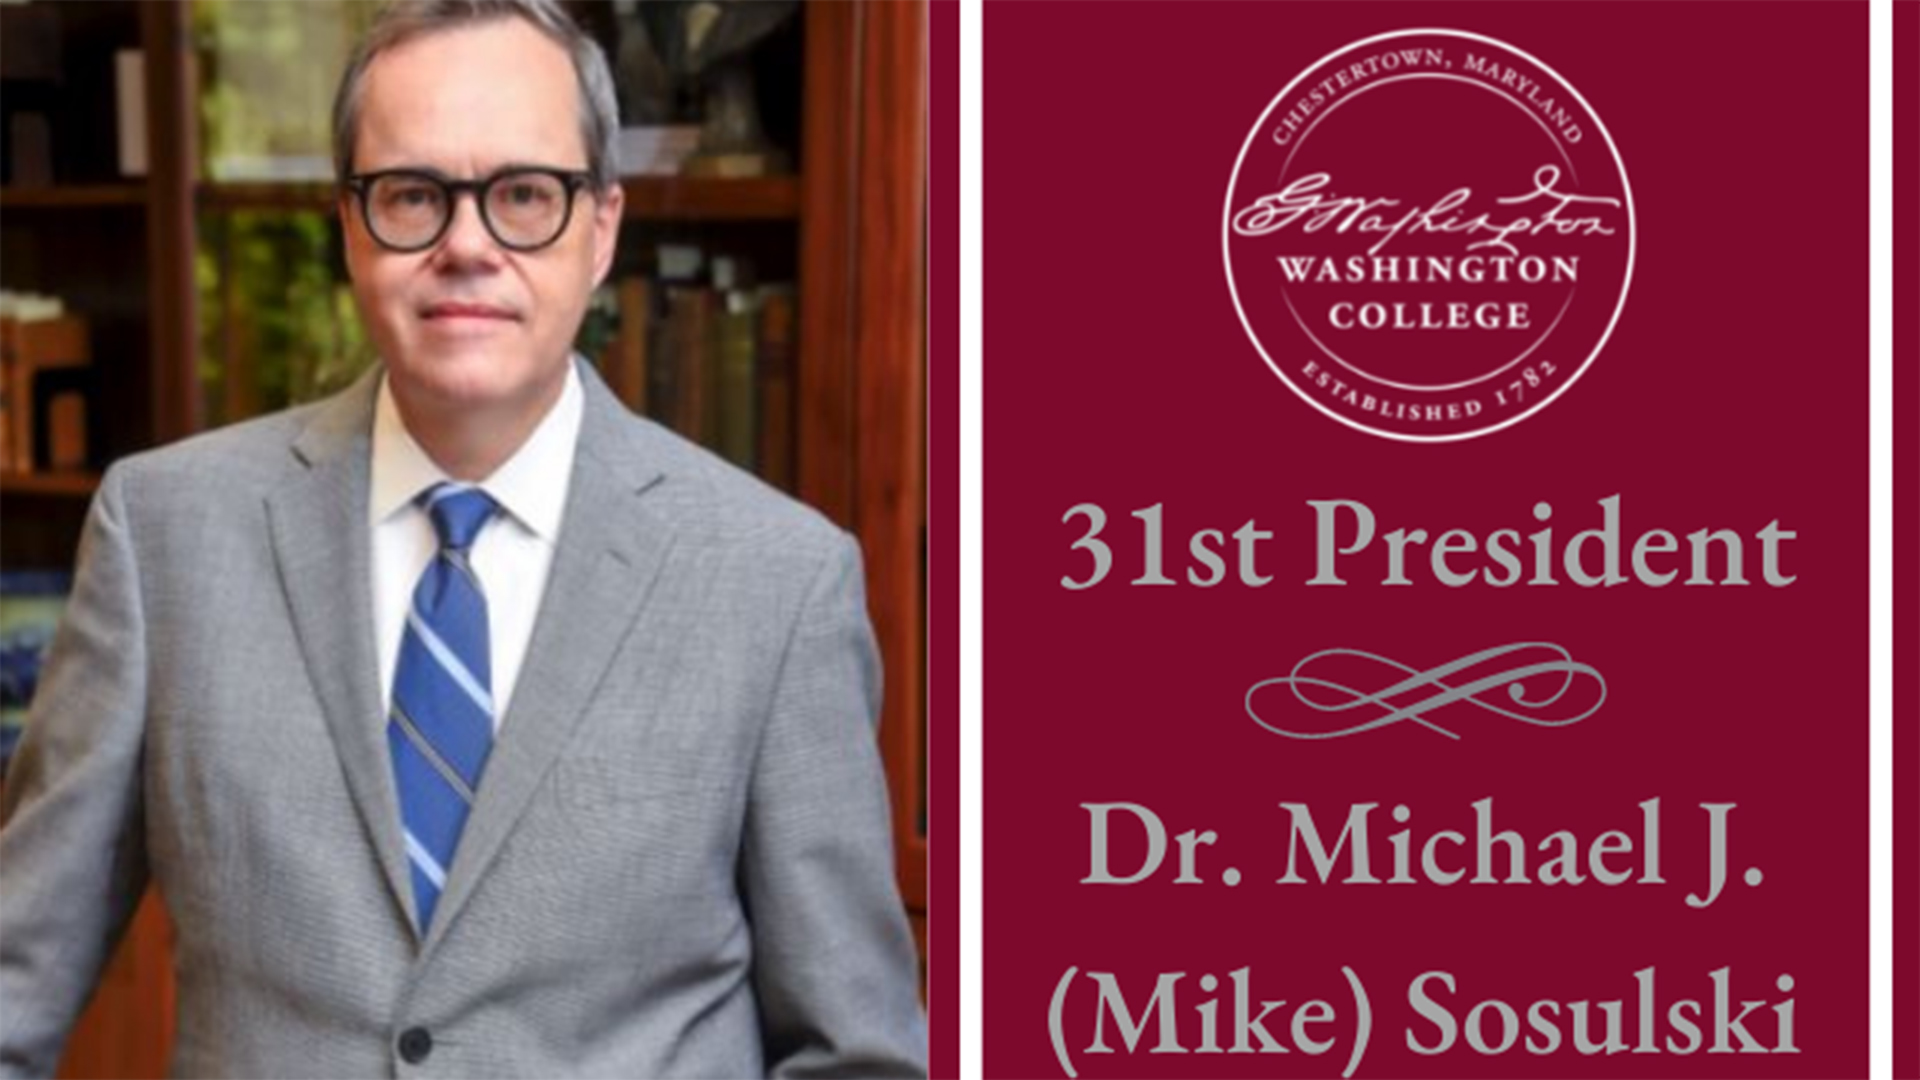 Washington College Names Michael J. Sosulski as 31st President